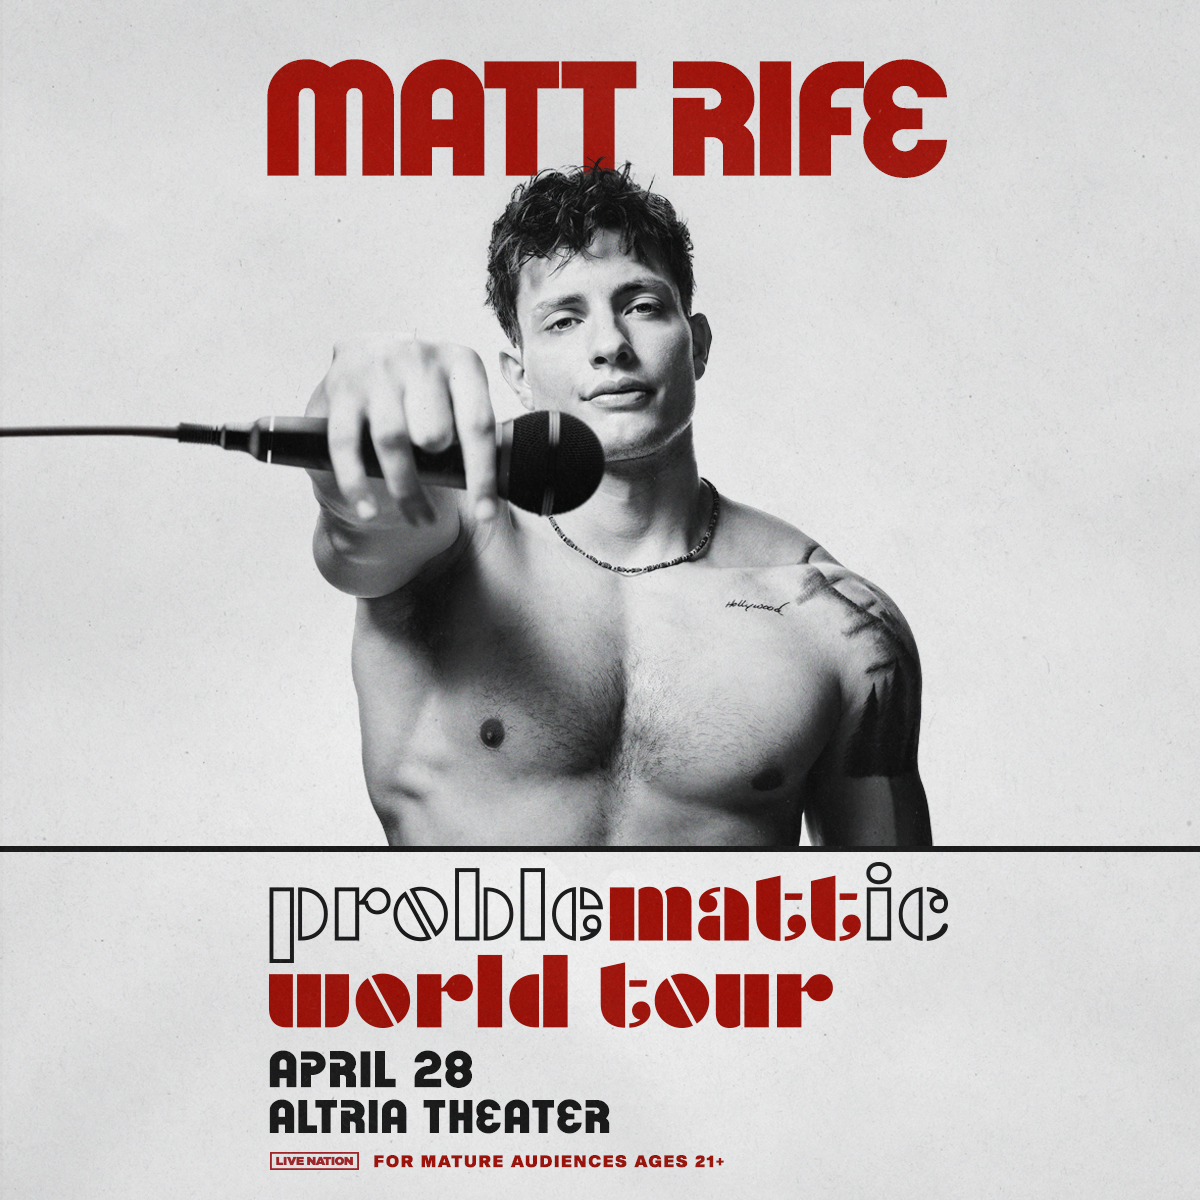 More Info for MATT RIFE ANNOUNCES ‘PROBLEMATTIC WORLD TOUR’